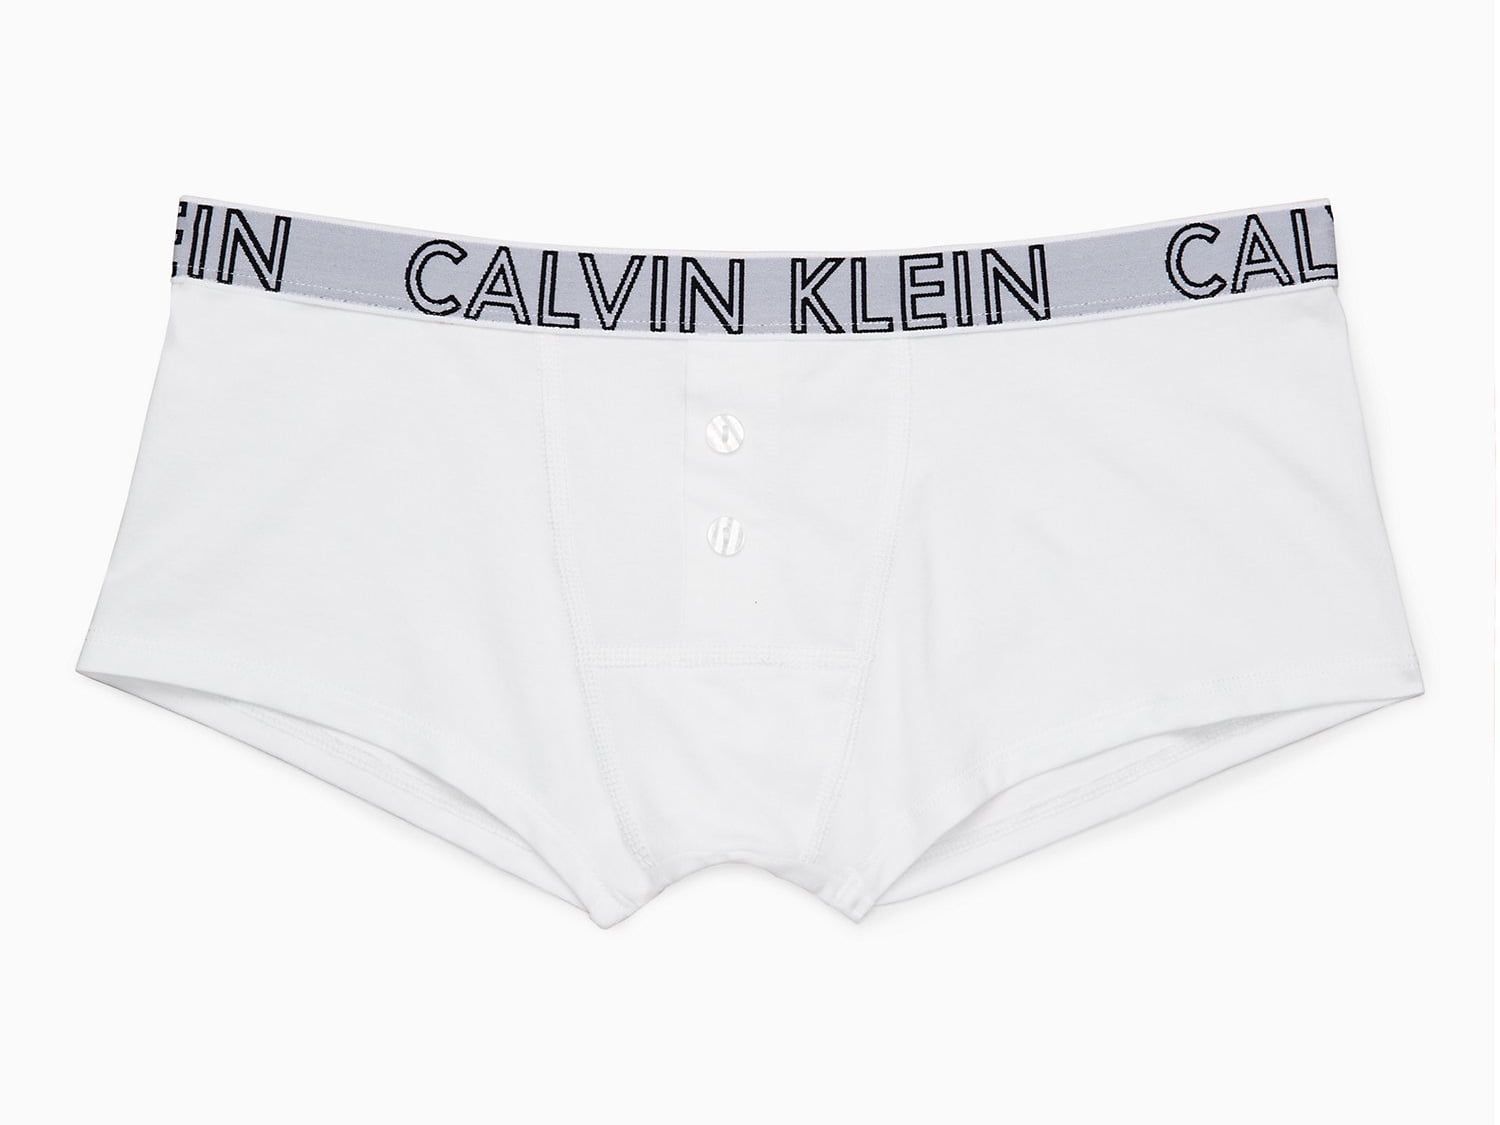 Knickers Calvin Klein Boyshort